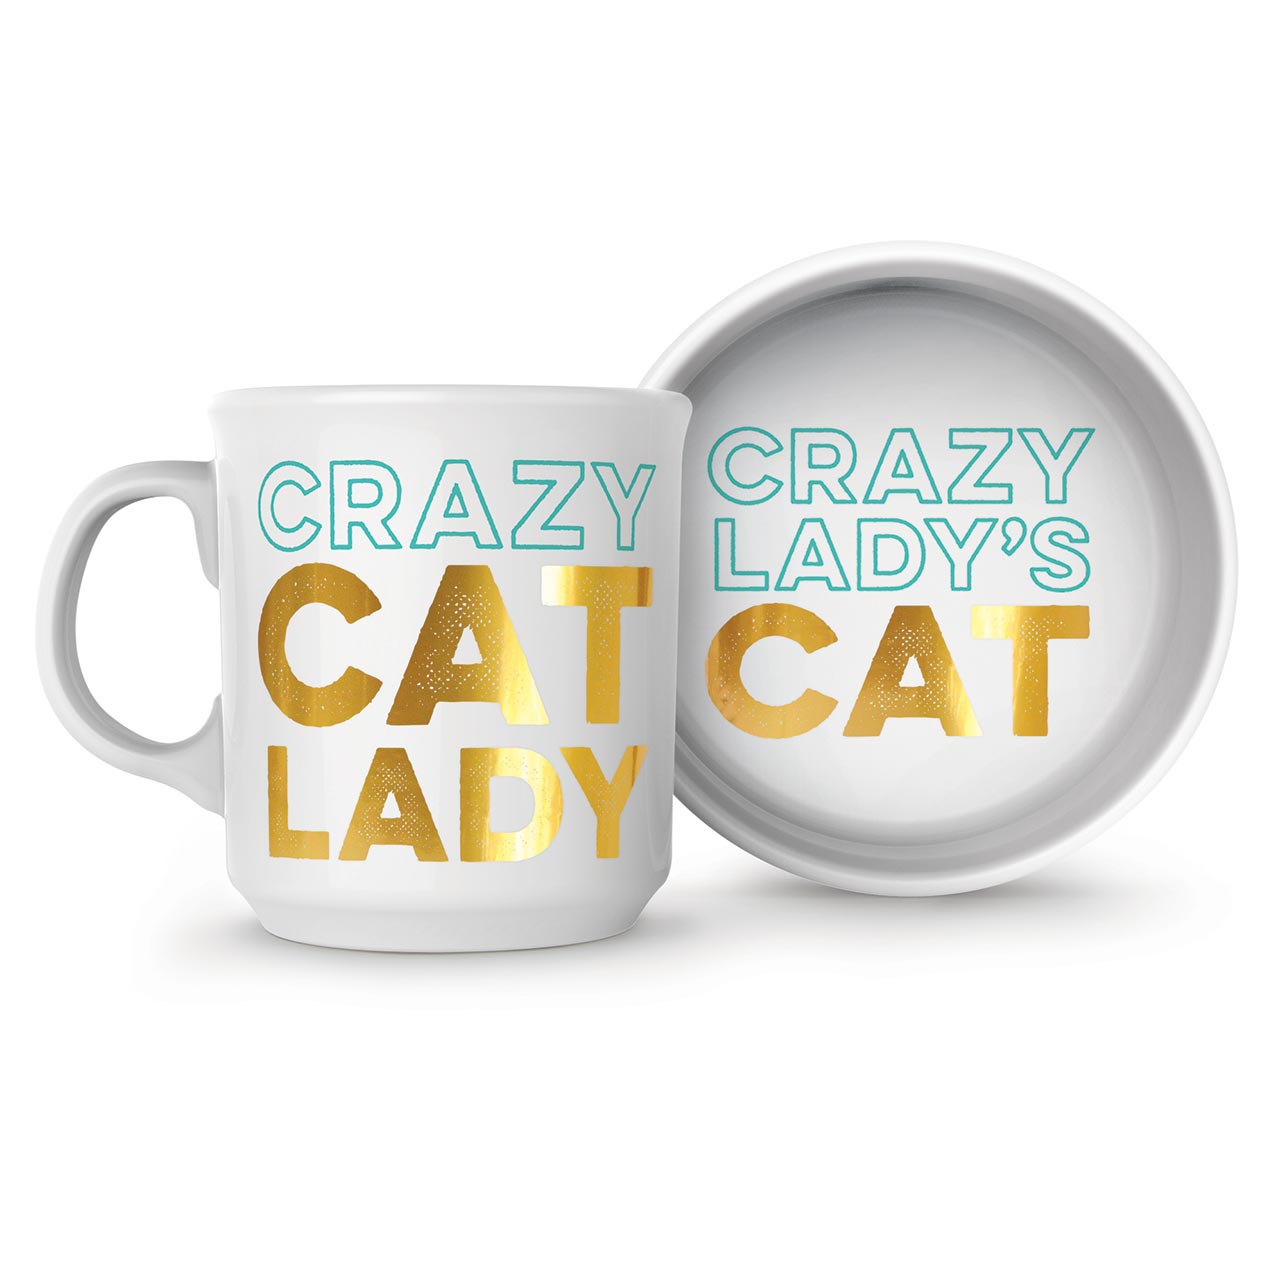 Cat Lady Bowl and Mug Set | The Design Gift Shop